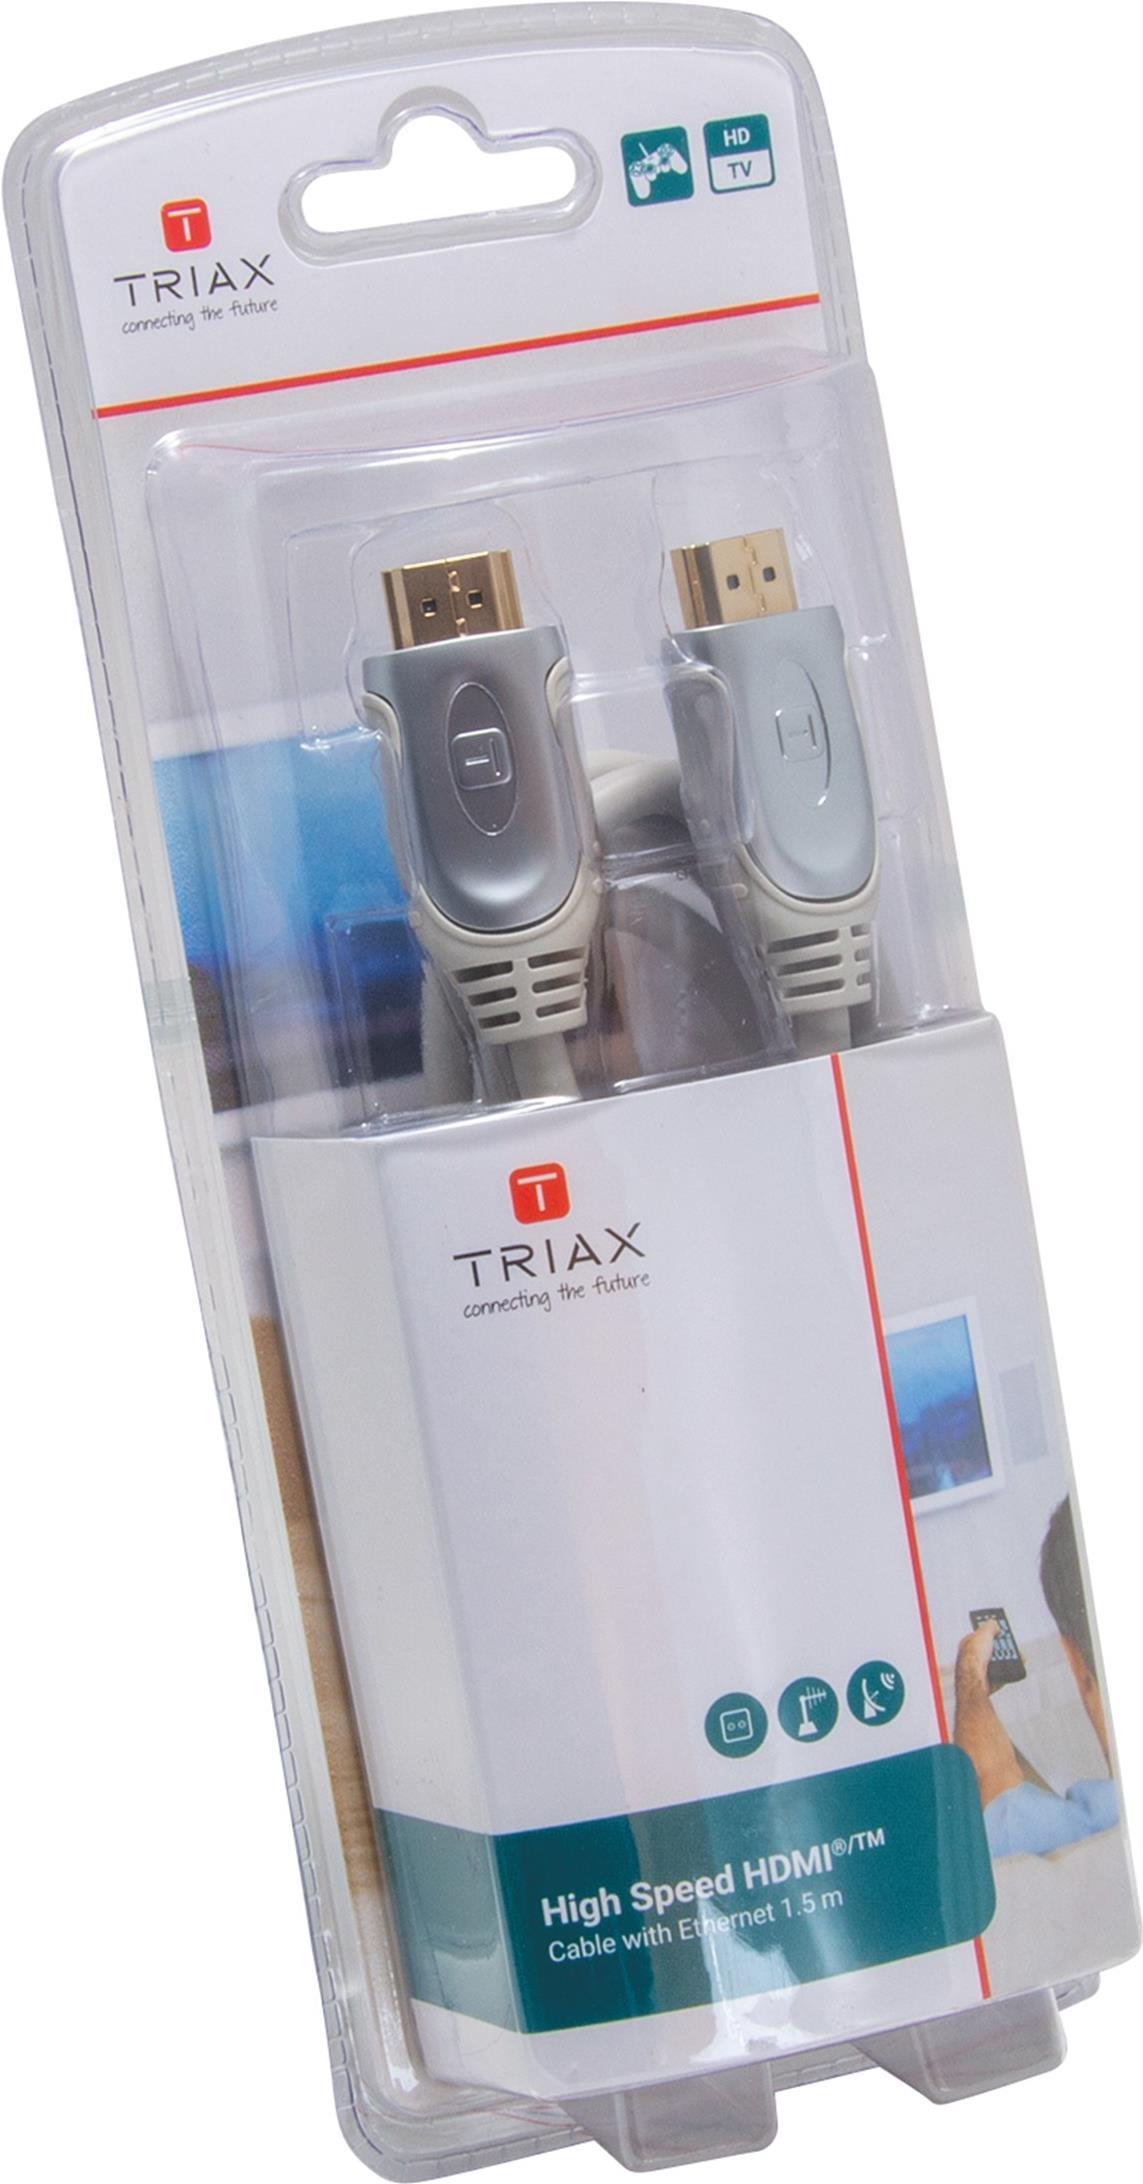 TRIAX HDMI 1.5m HDMIKabel mit Ethernet 370715 5702663707153